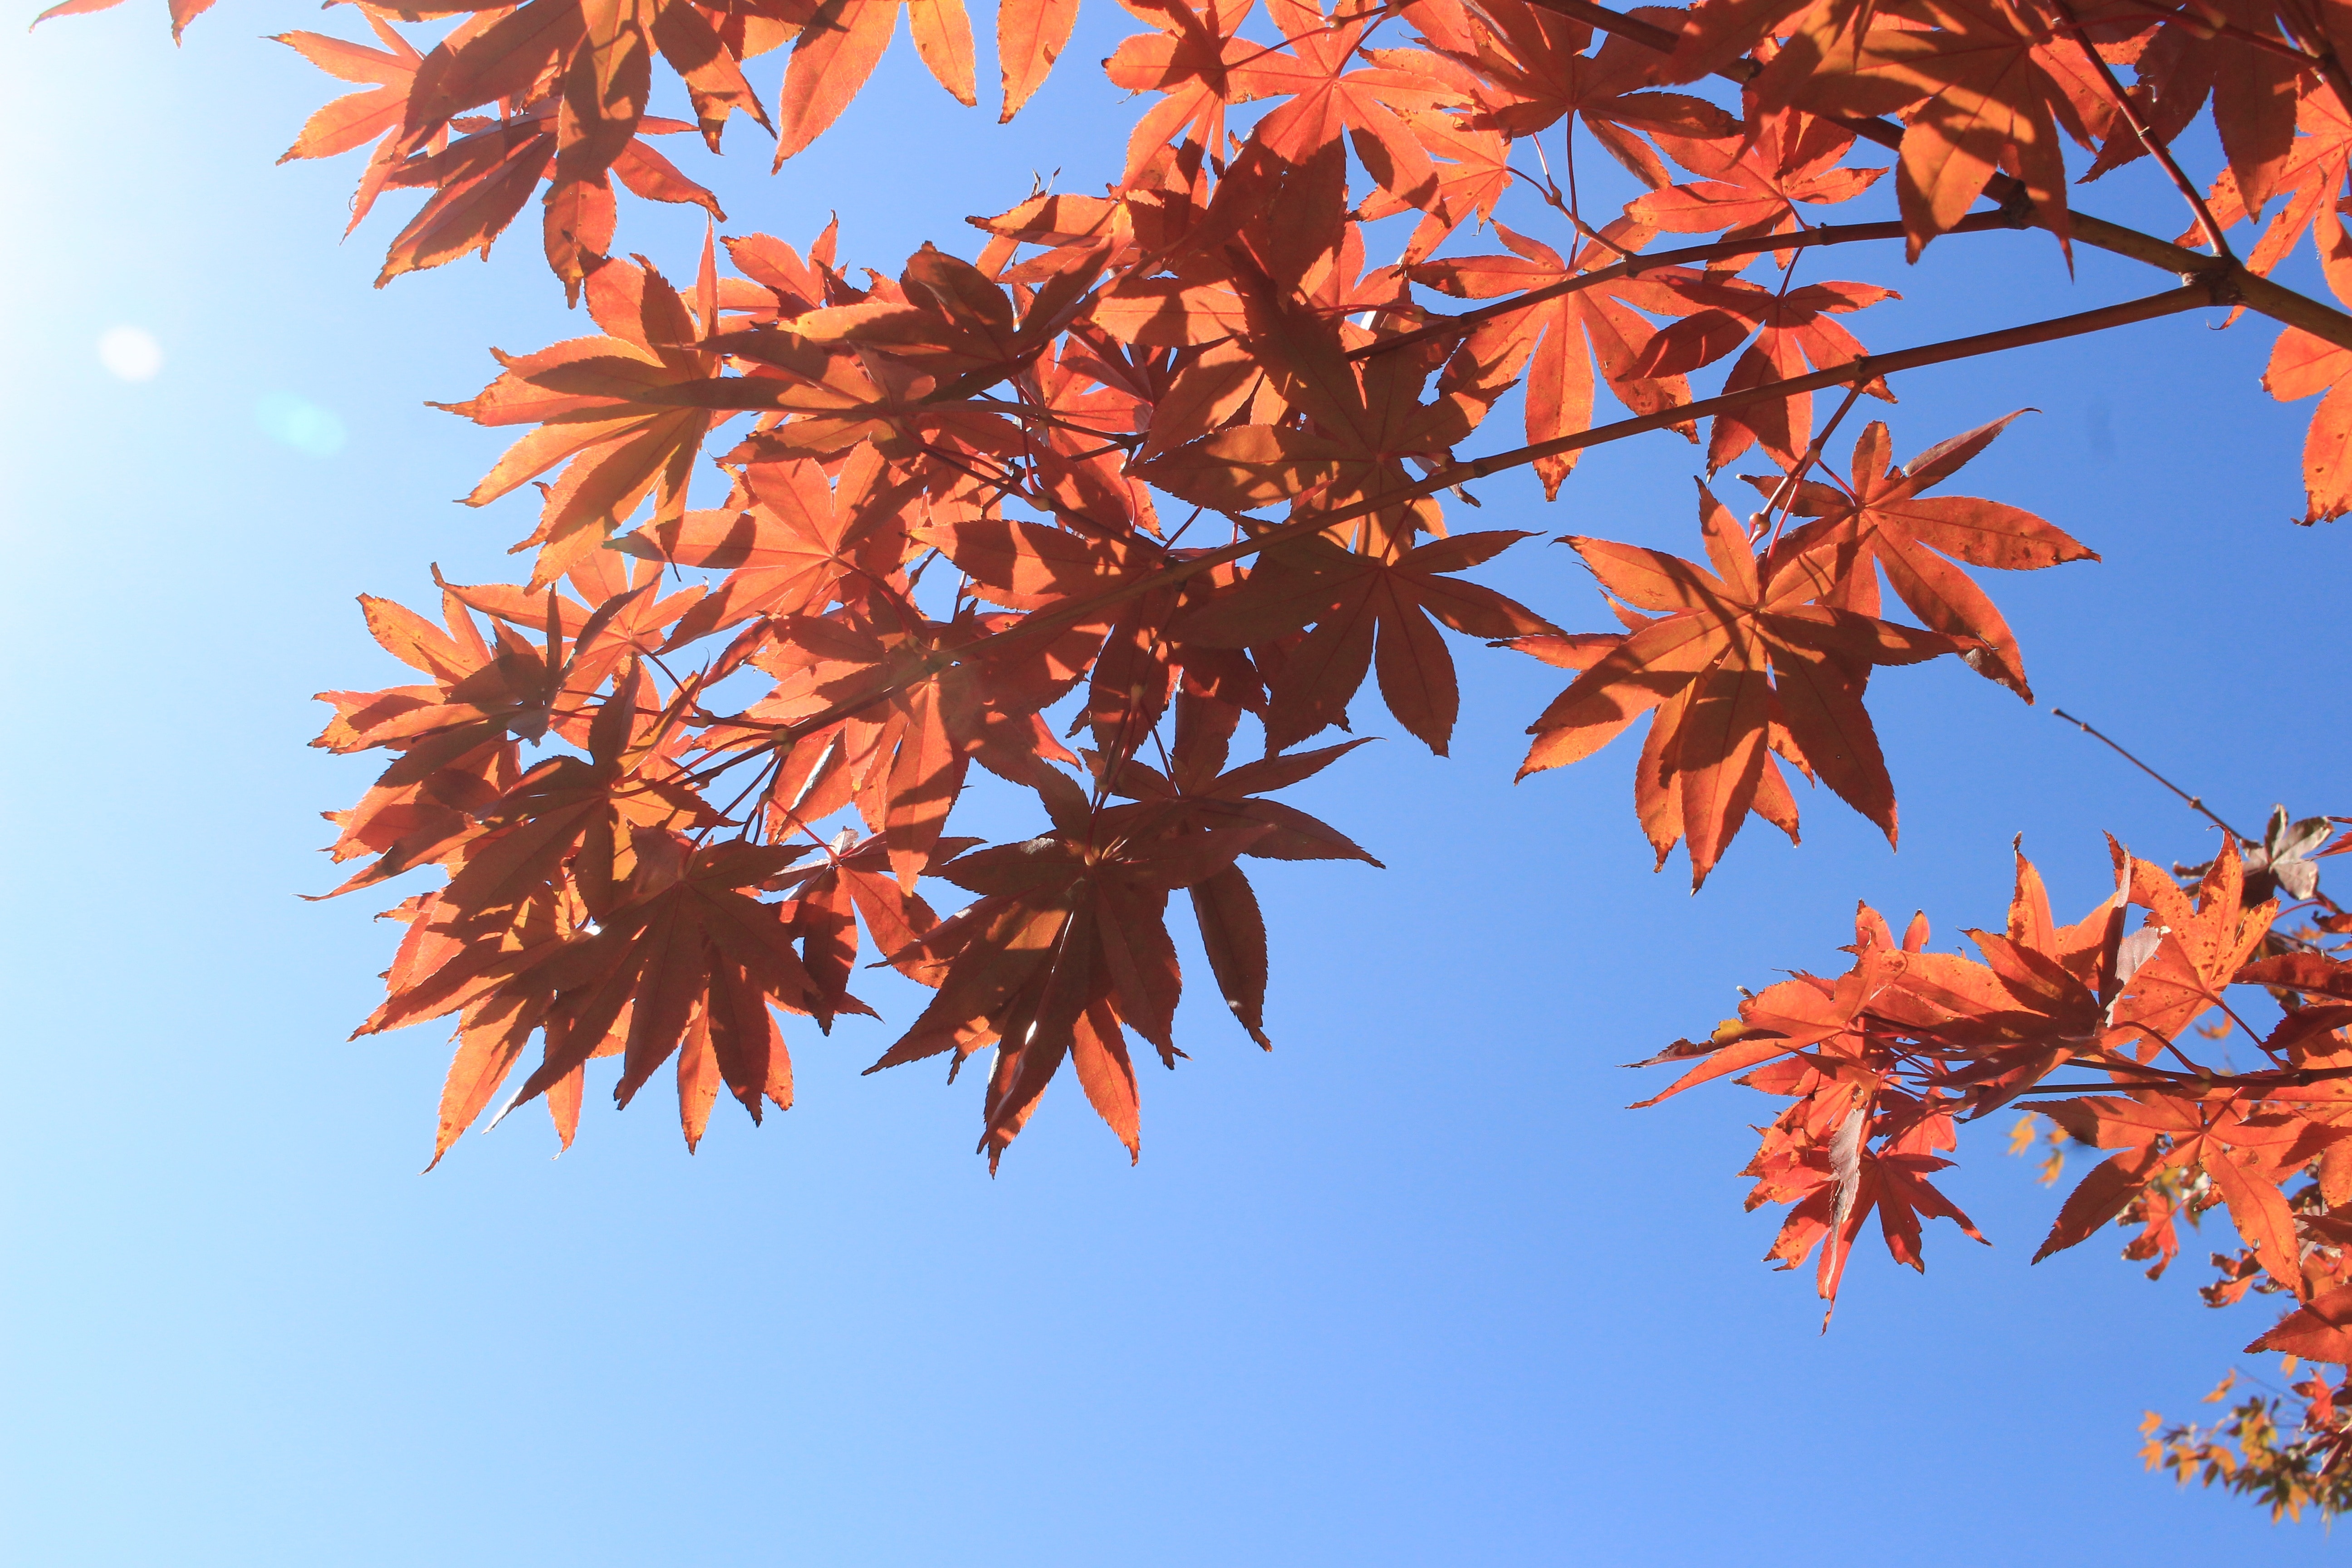 Sky, Autumn, Red, Plants, Autumn Leaves, autumn, leaf